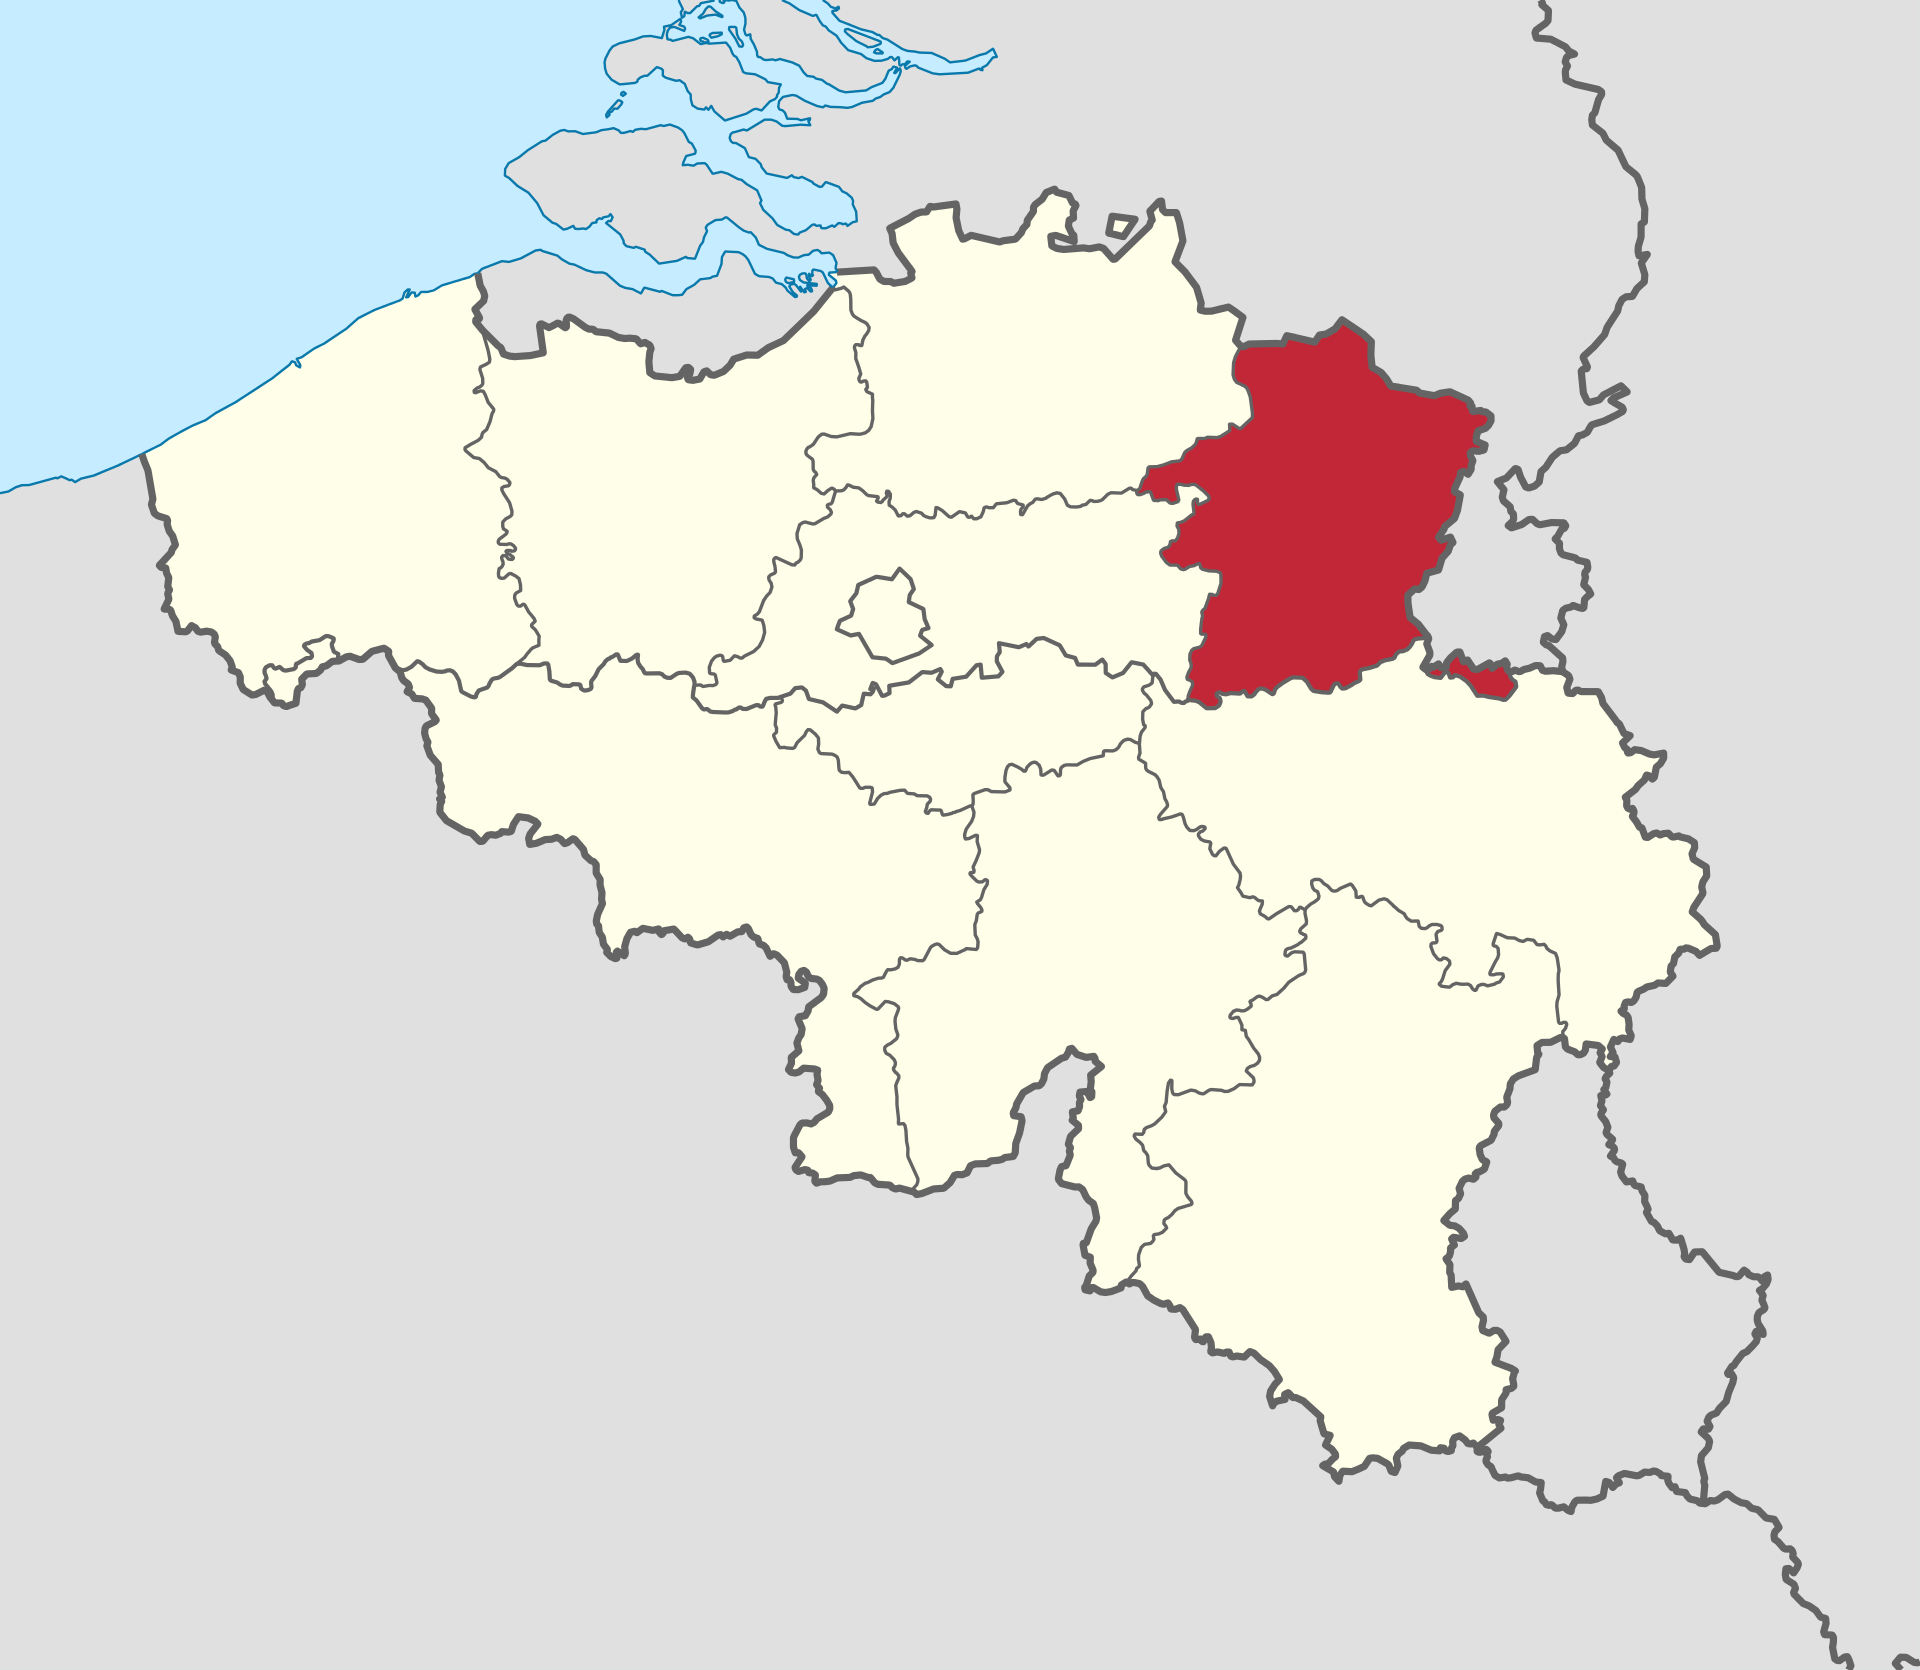 B School Urbex location or around the region Limburg (Vlaams Gewest), Belgium